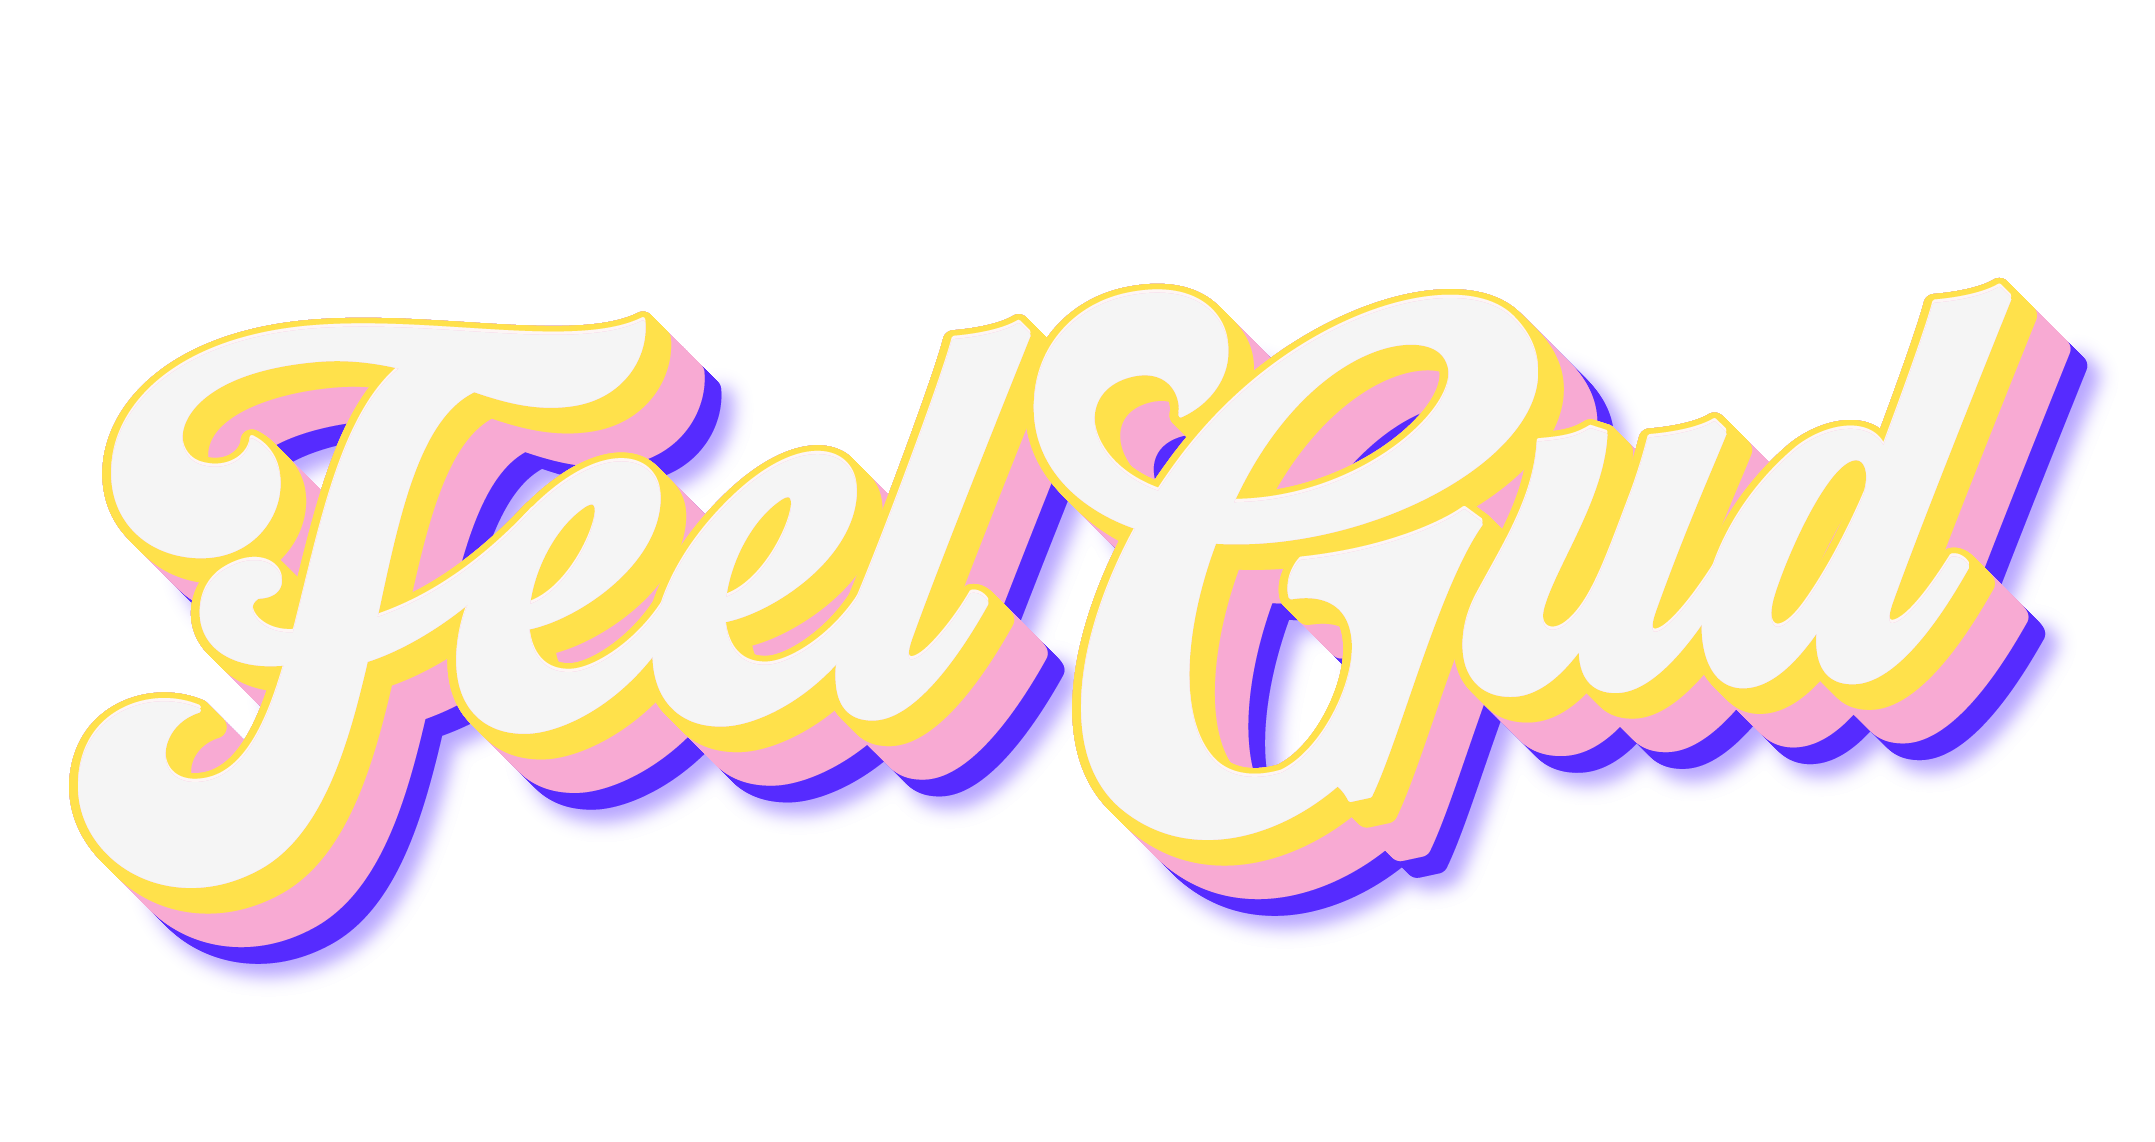 FeelGud logo